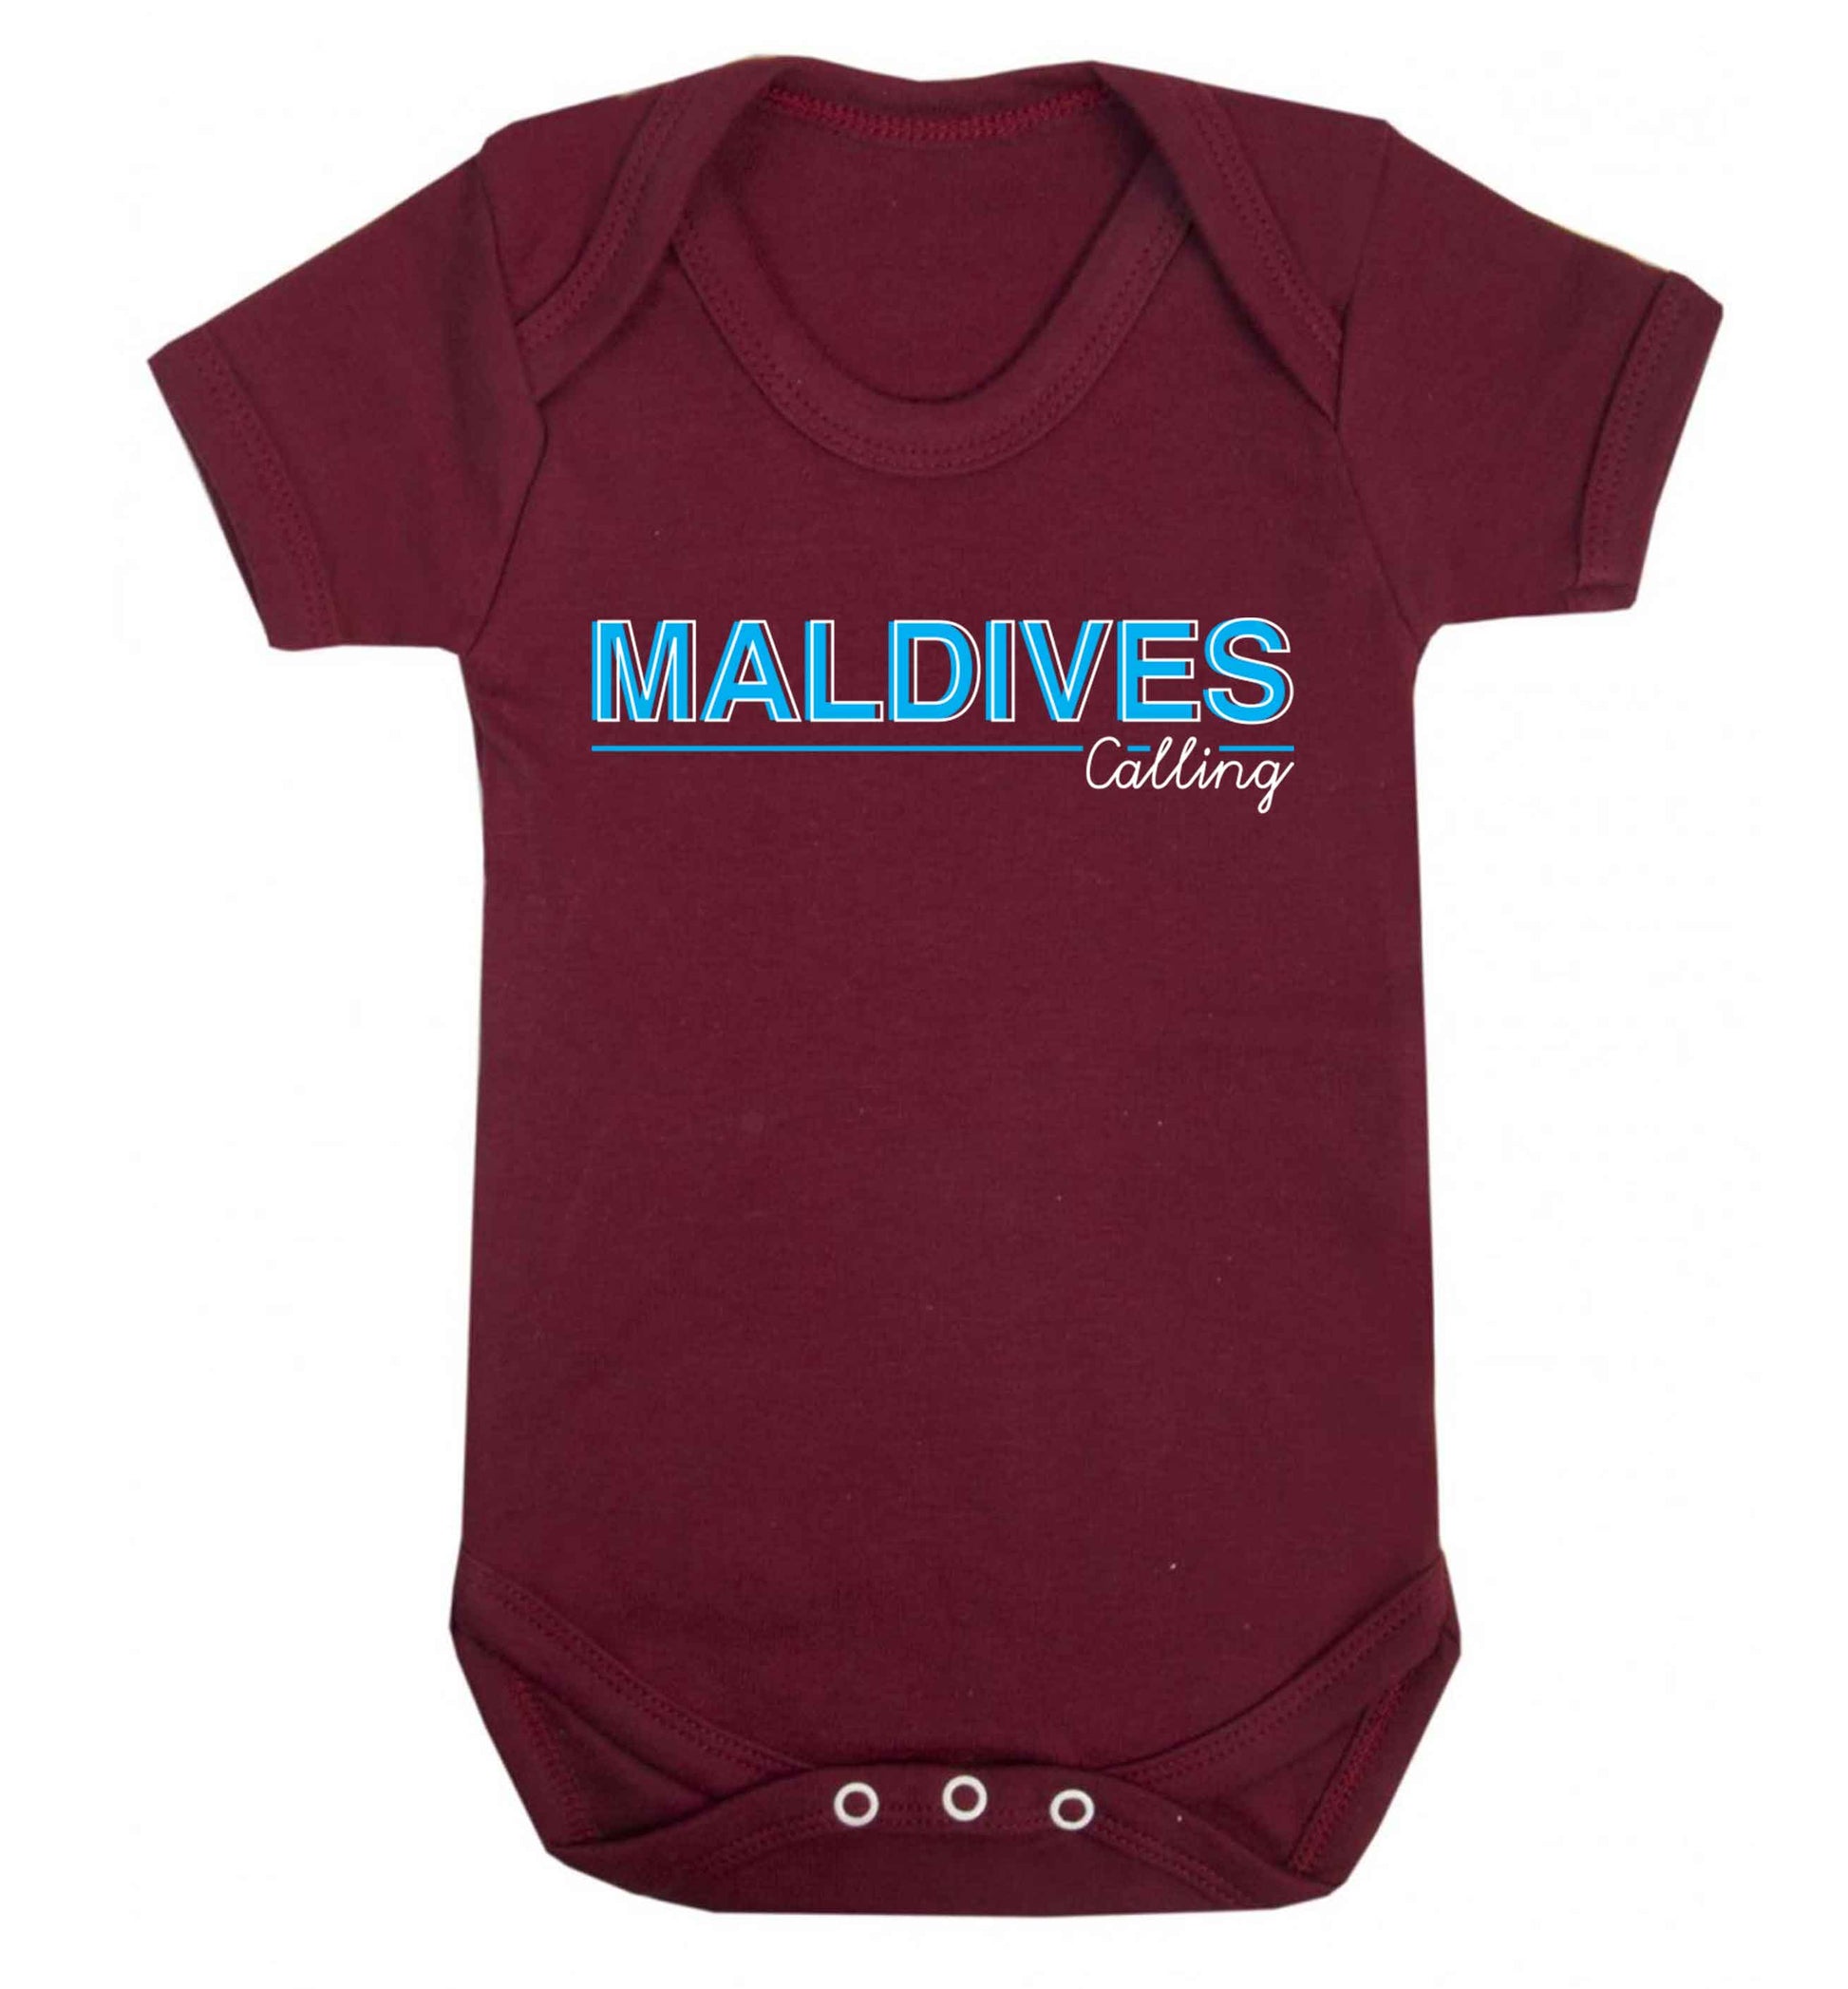 Maldives calling Baby Vest maroon 18-24 months